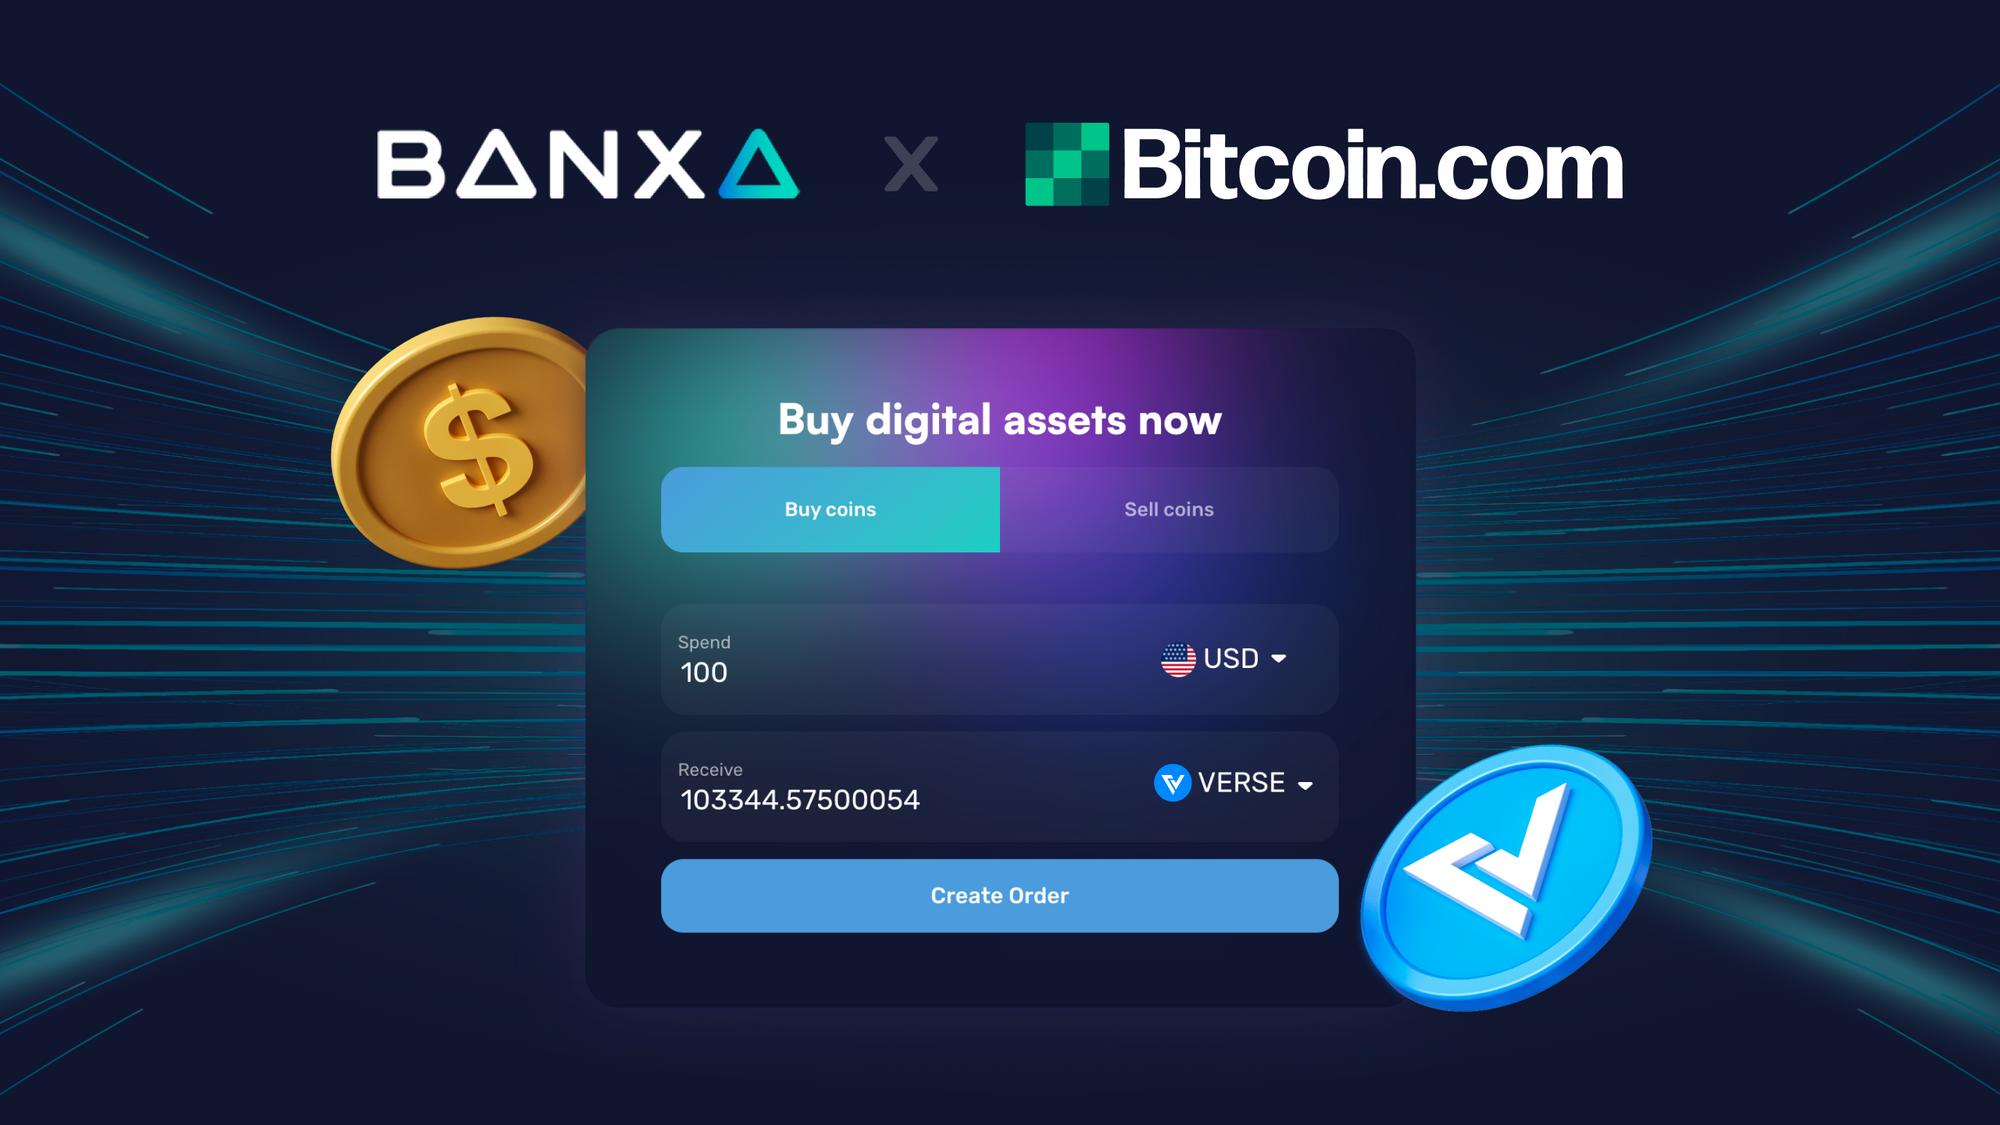 Bitcoin.com and Banxa partnership kicks off with VERSE integration